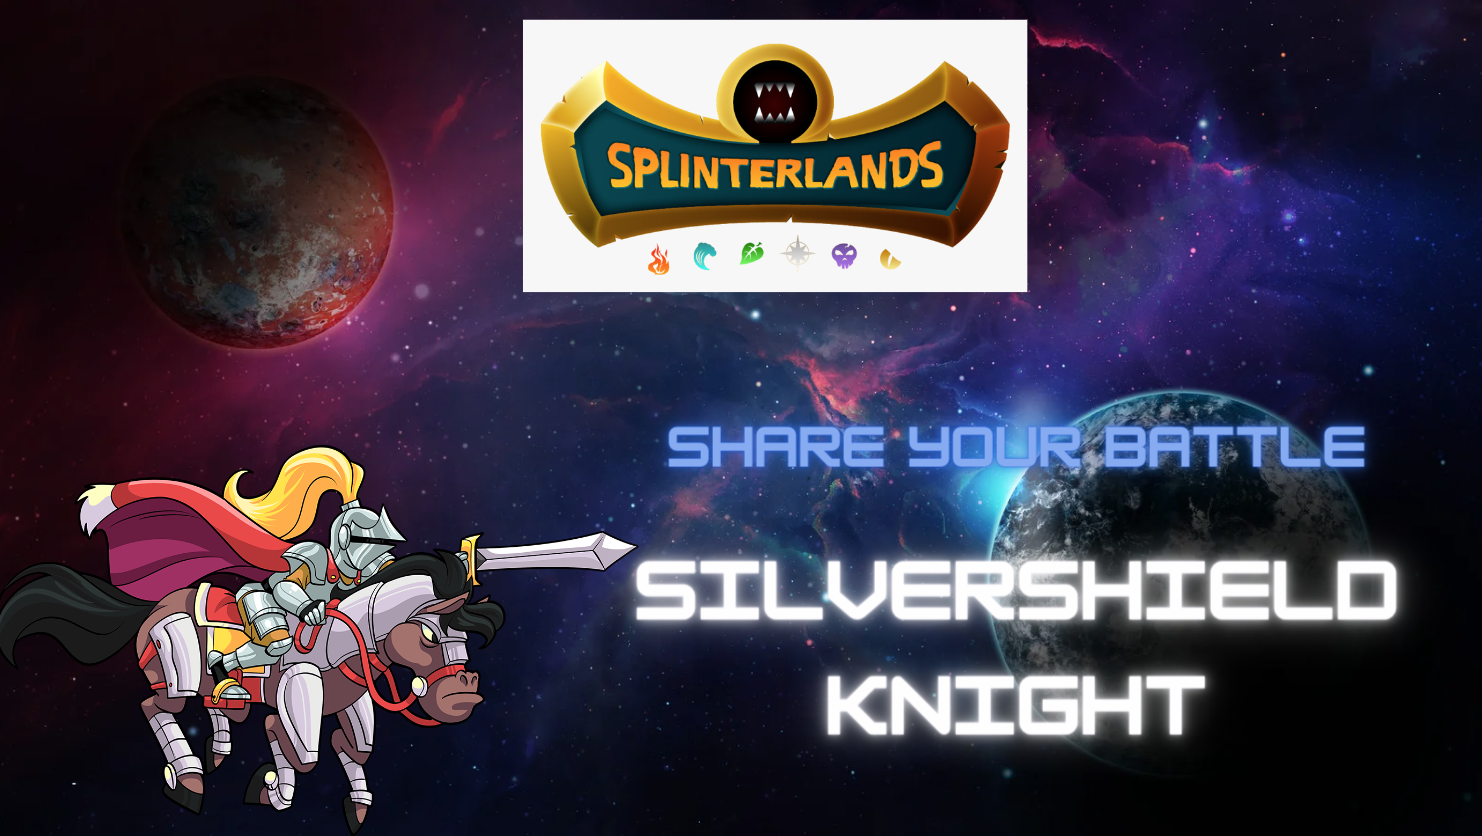 @vaynard86/share-your-battle-silvershield-knight